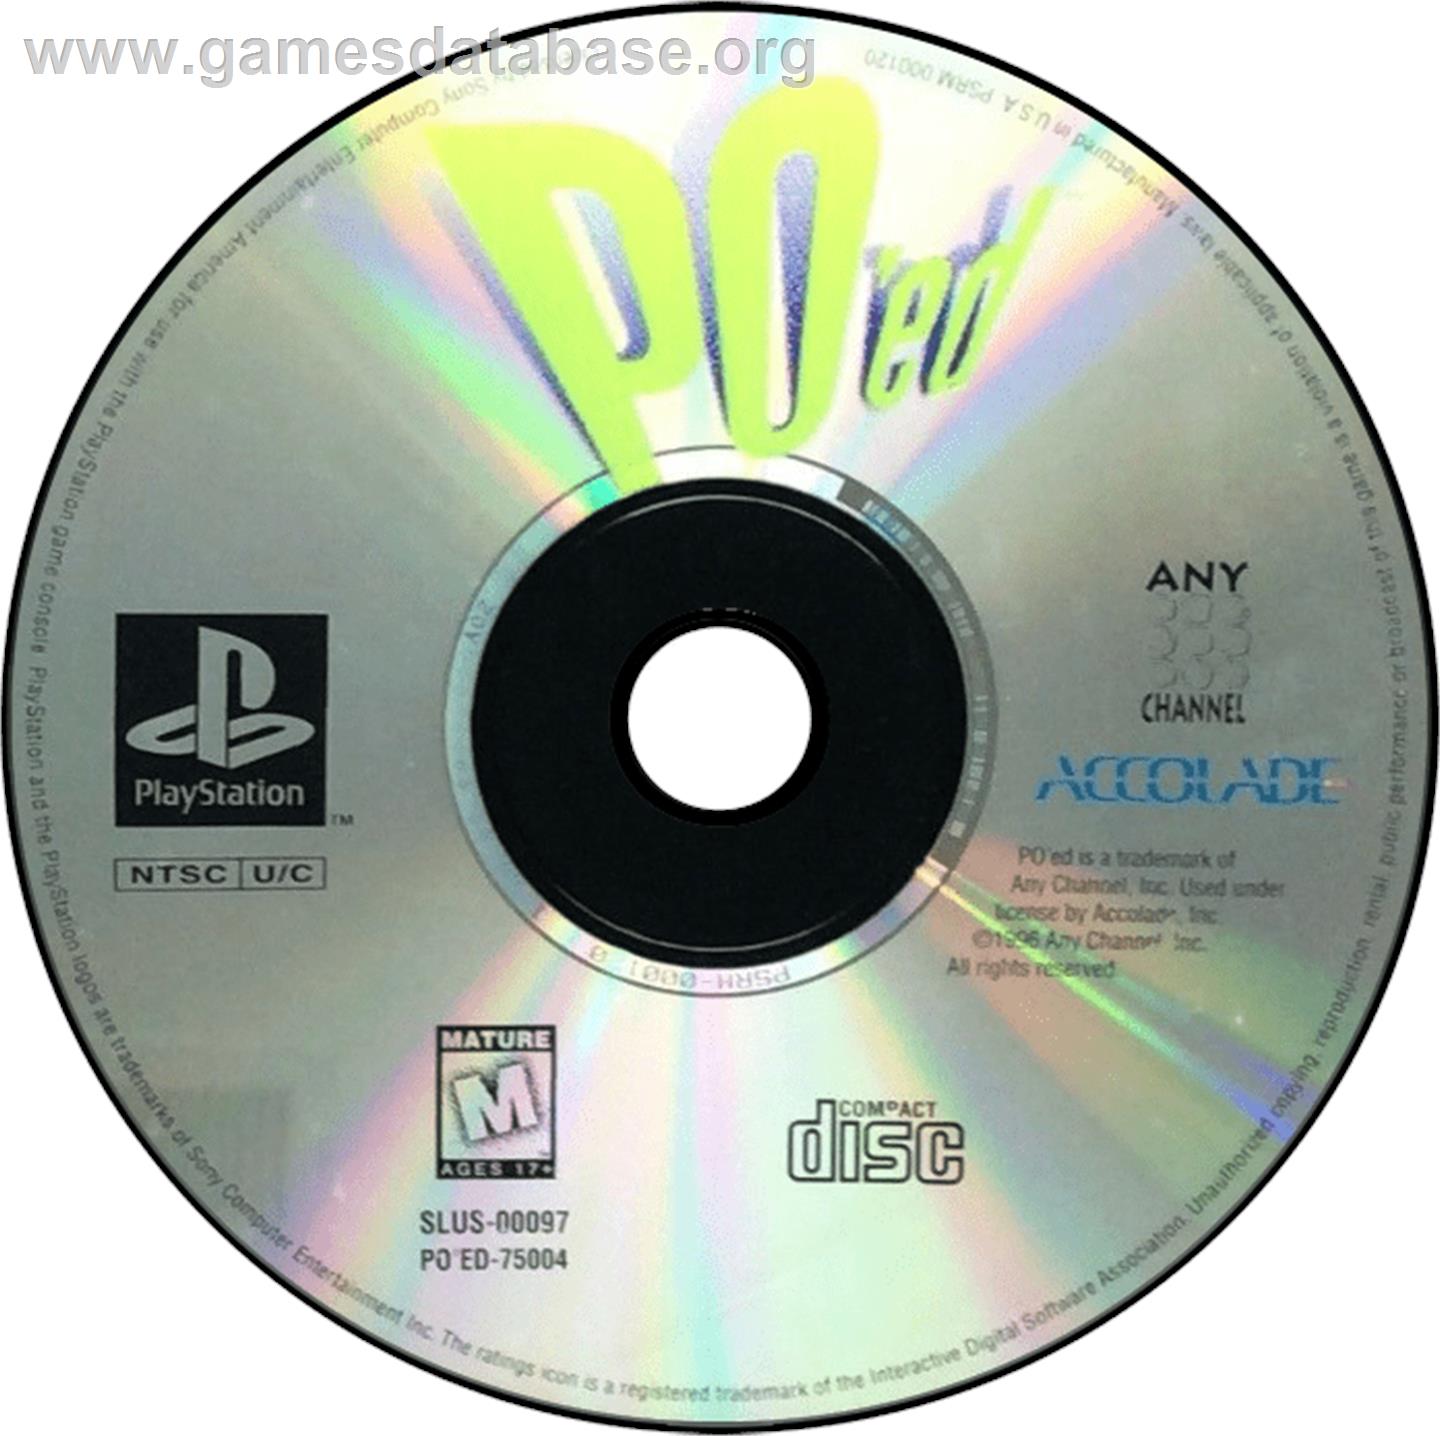 PO'ed - Sony Playstation - Artwork - Disc